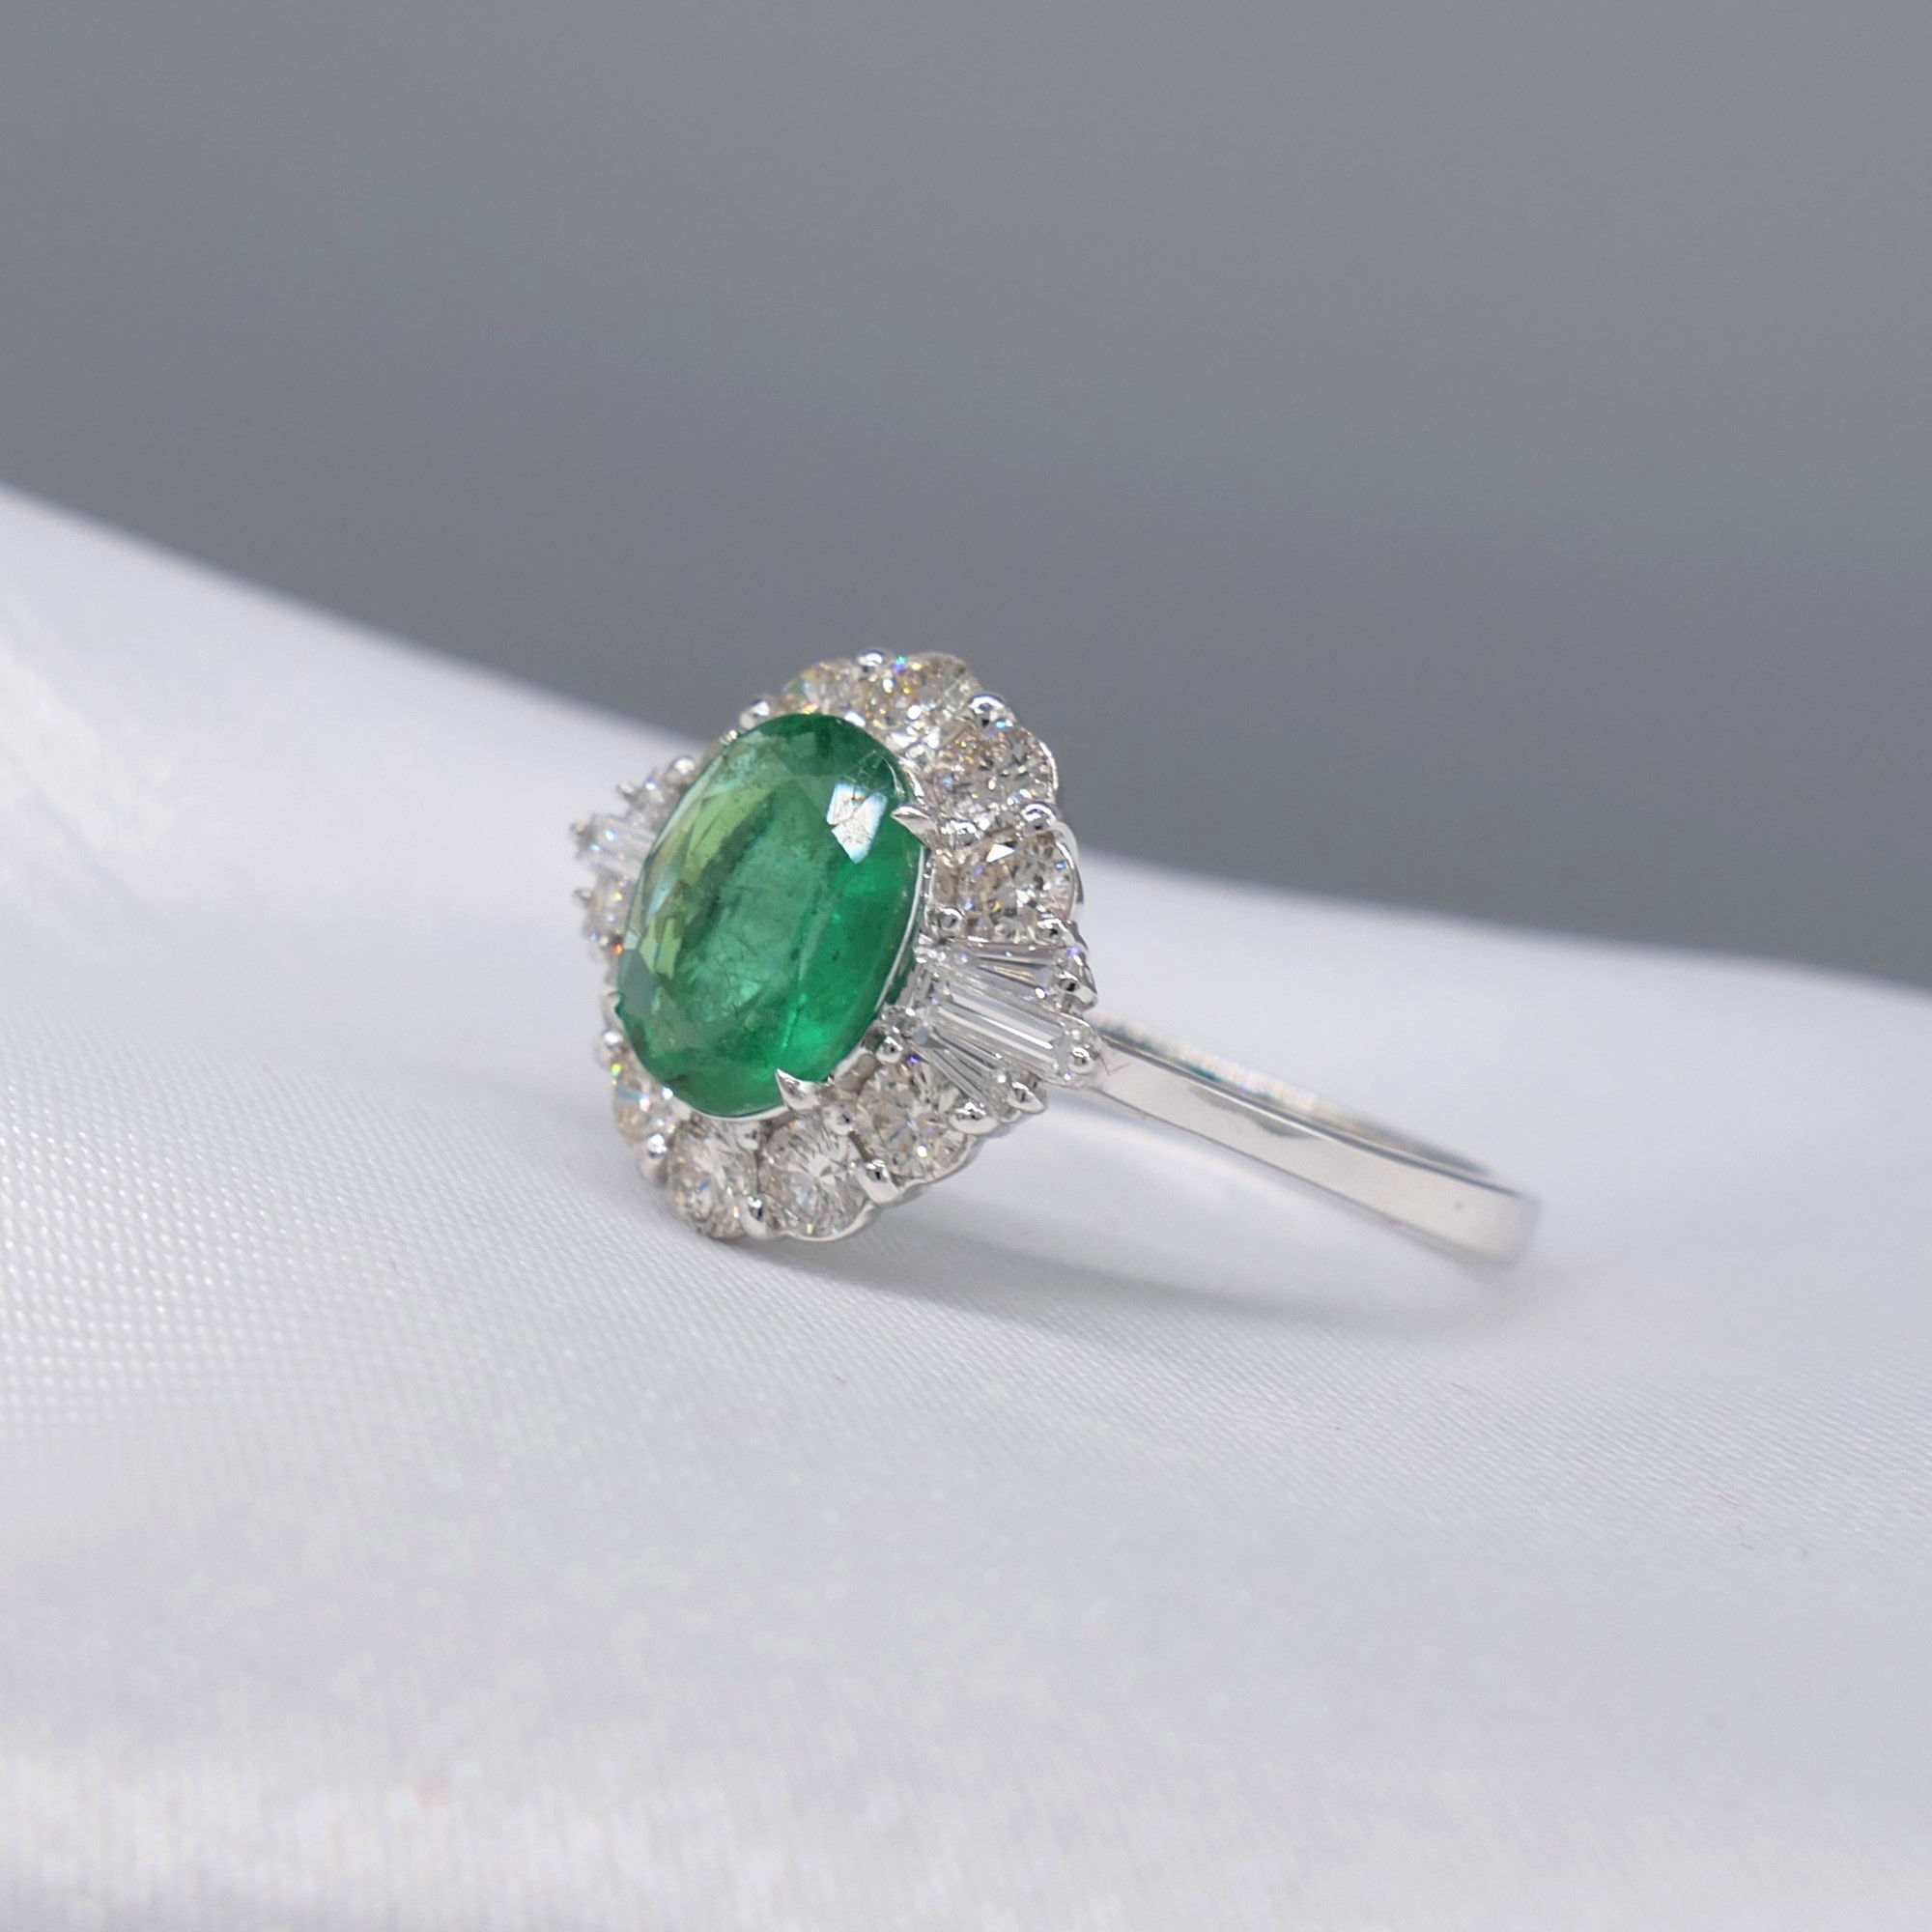 Stylish 1.05 carat emerald and diamond dress ring - Image 8 of 8